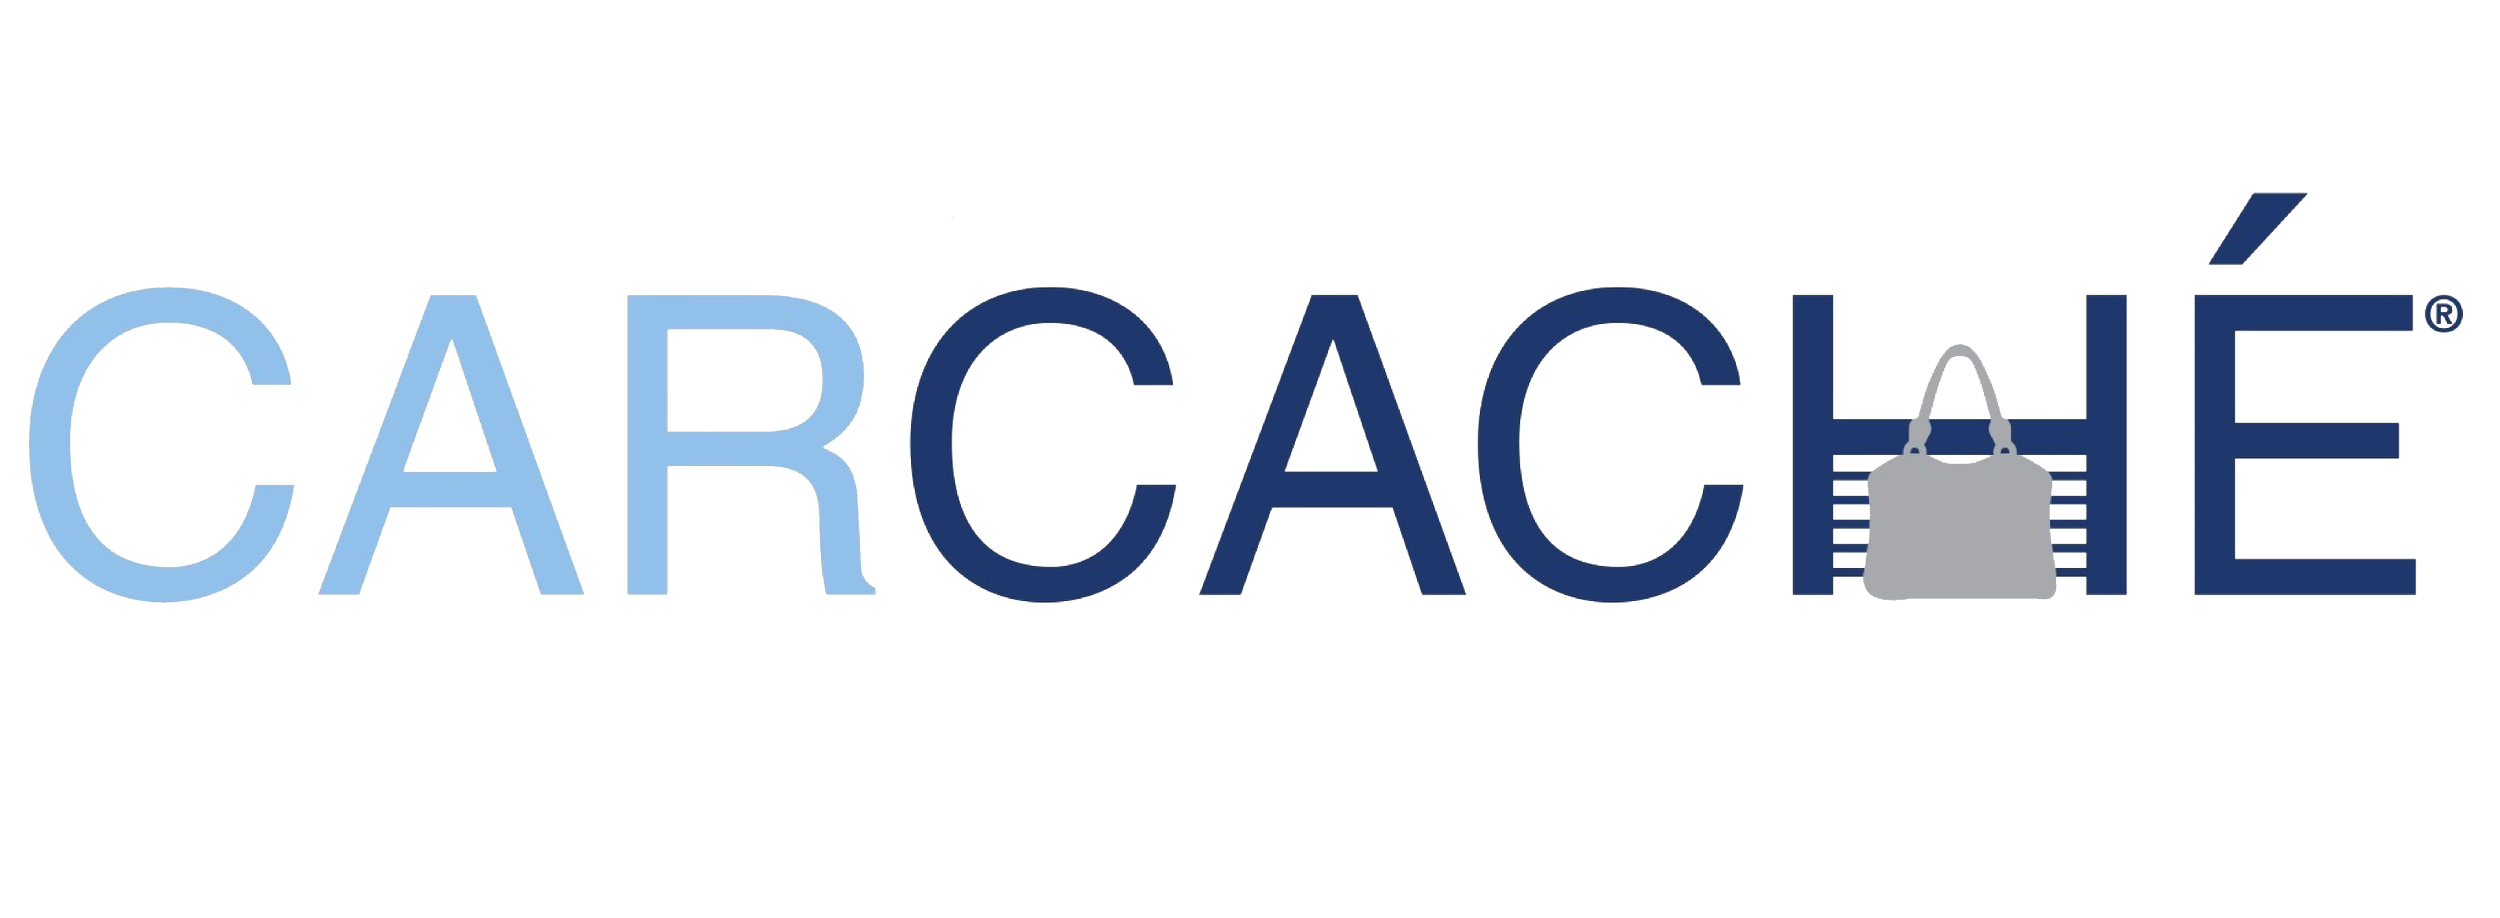 Car Cache Logo.png